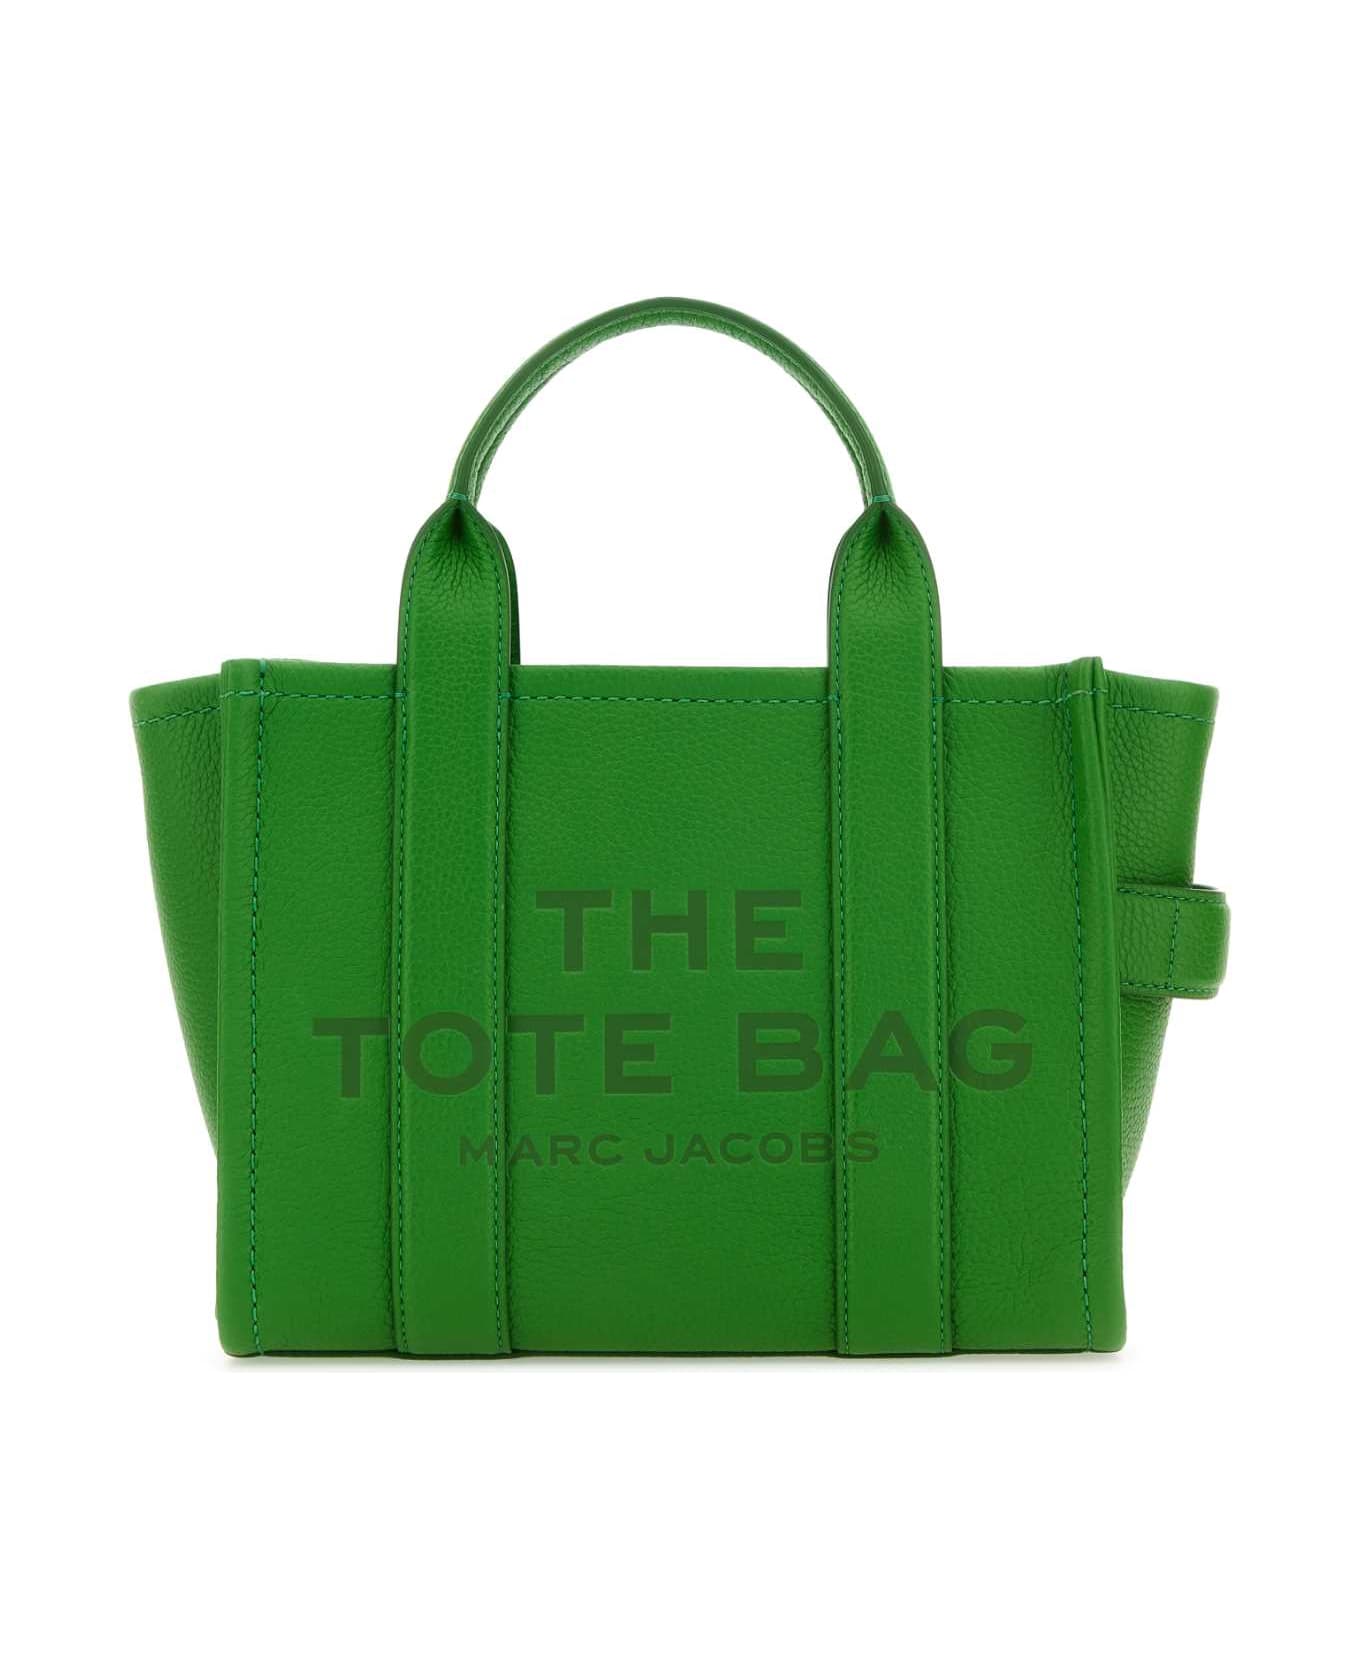 Marc Jacobs Green Leather Mini The Tote Bag Handbag - KIWI